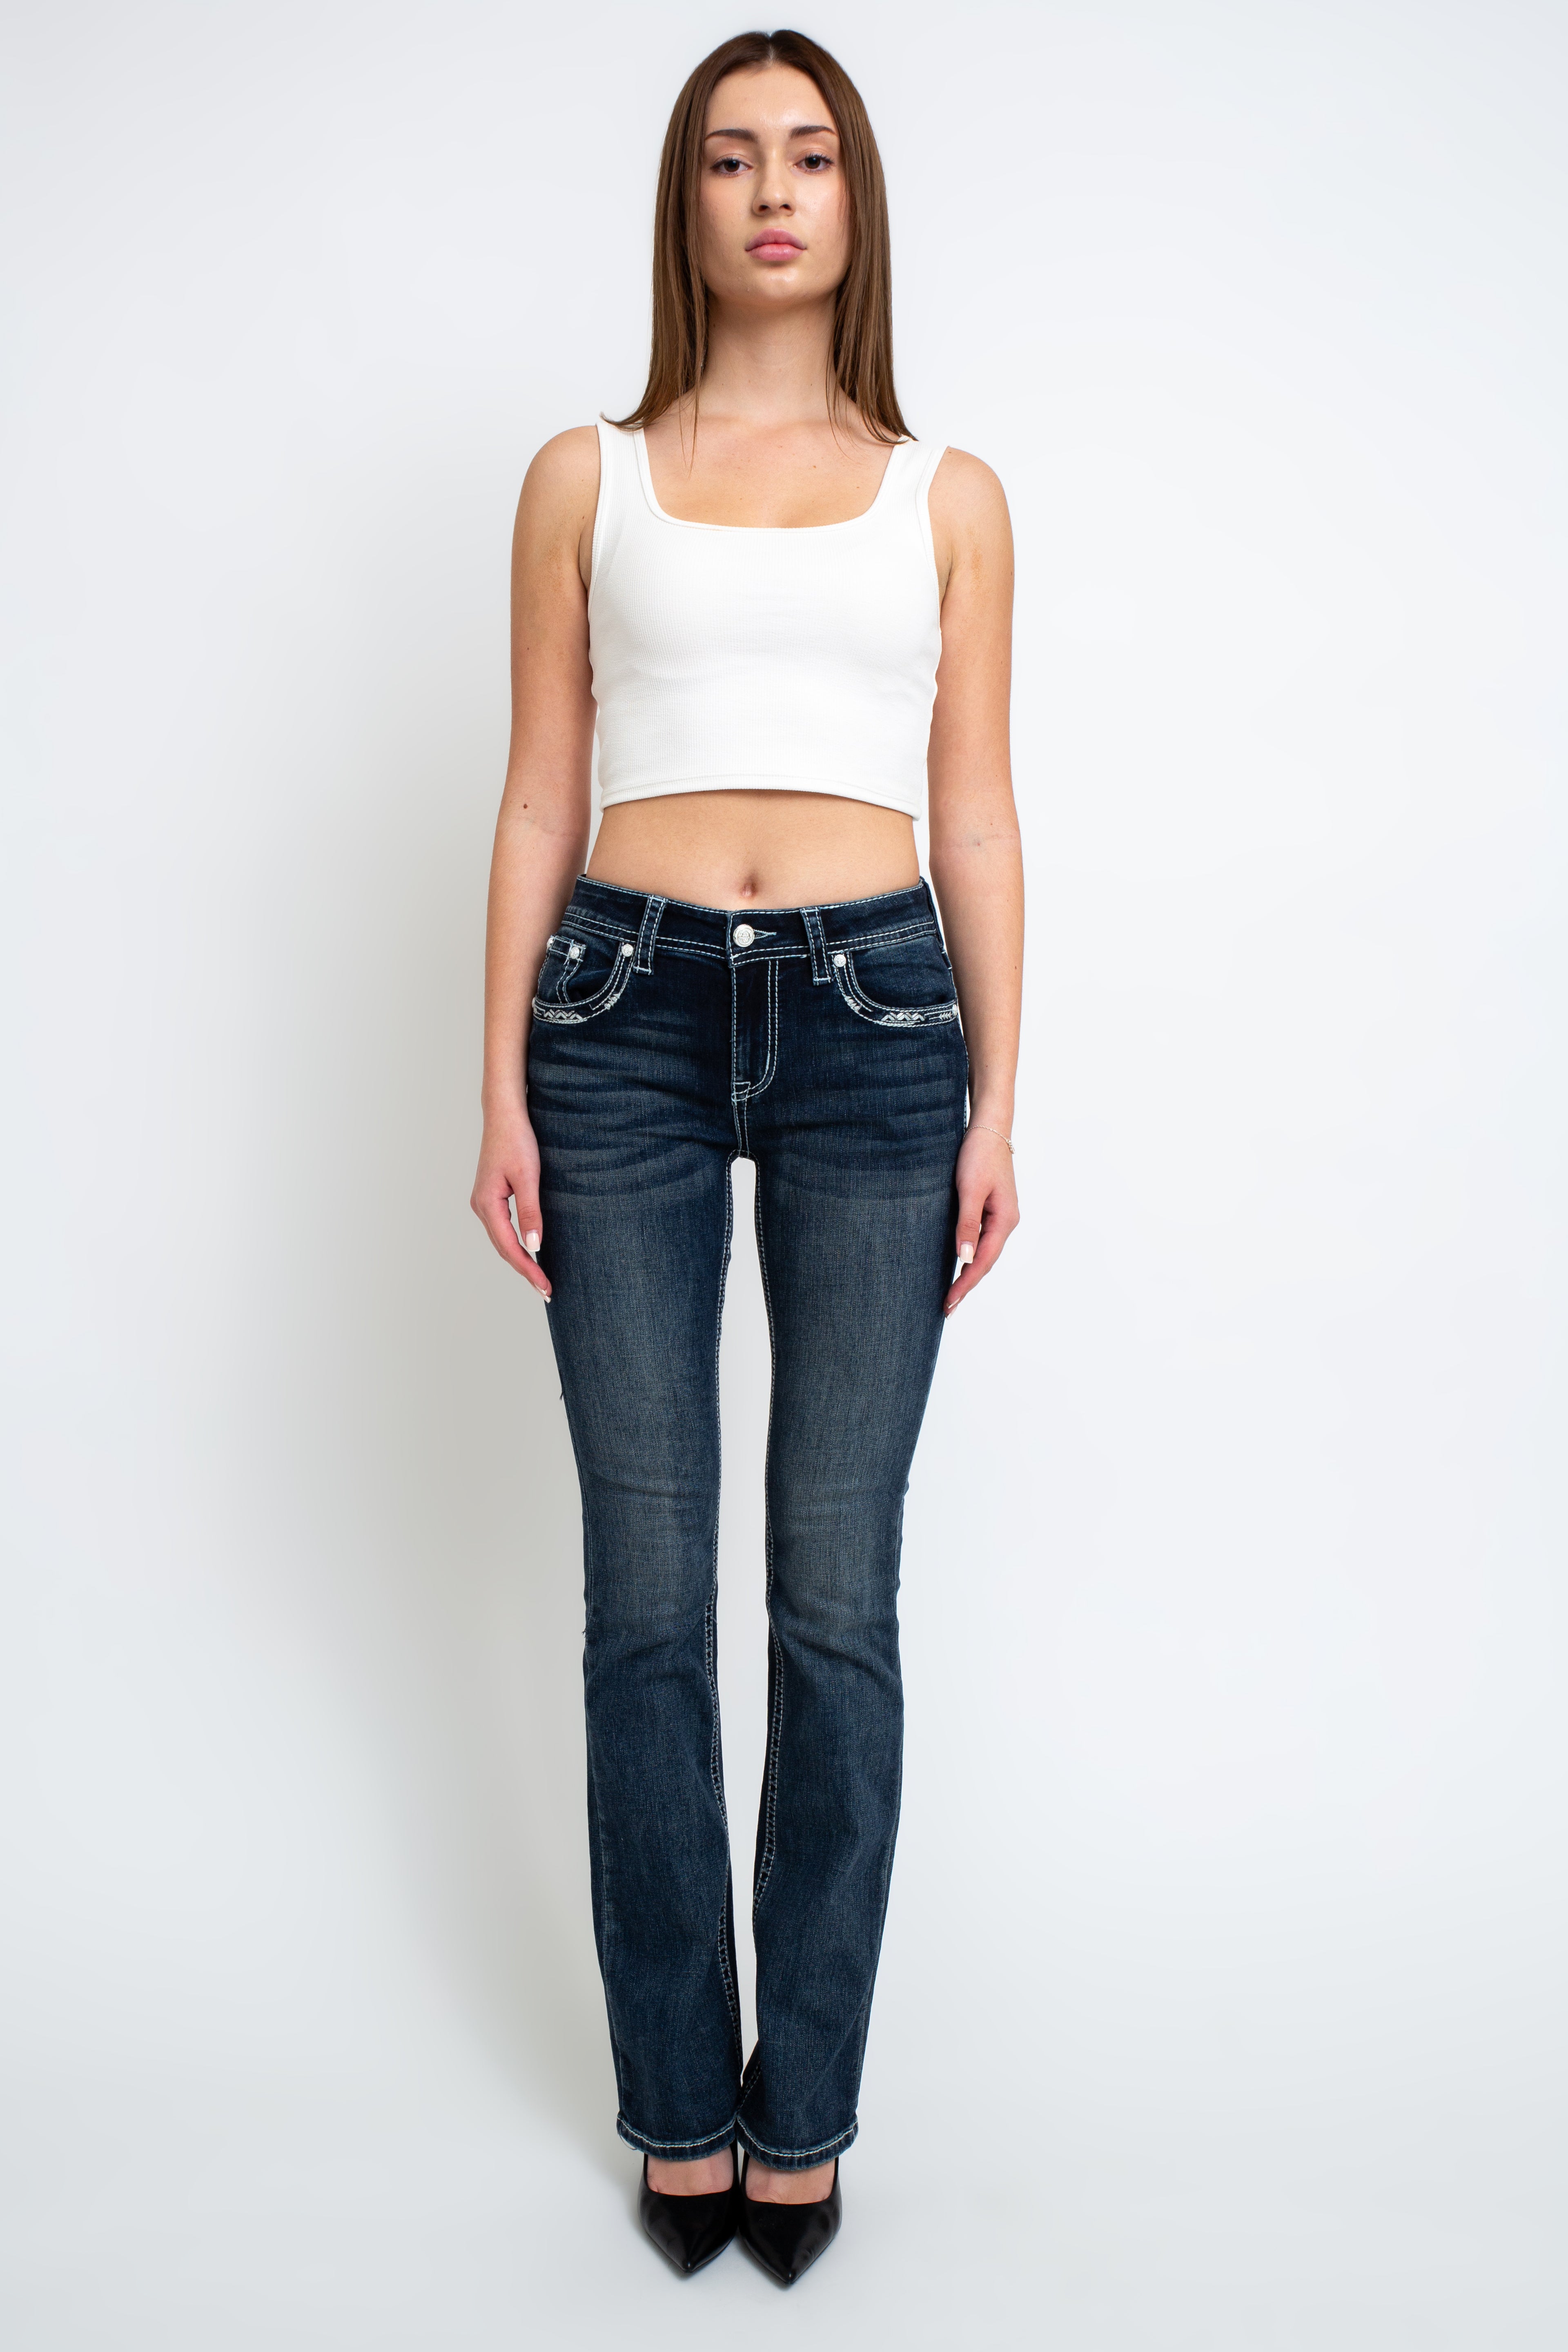 womens-embellished-jeans-embellished-jeans-bootcut-jeans-grace-in-la-denim